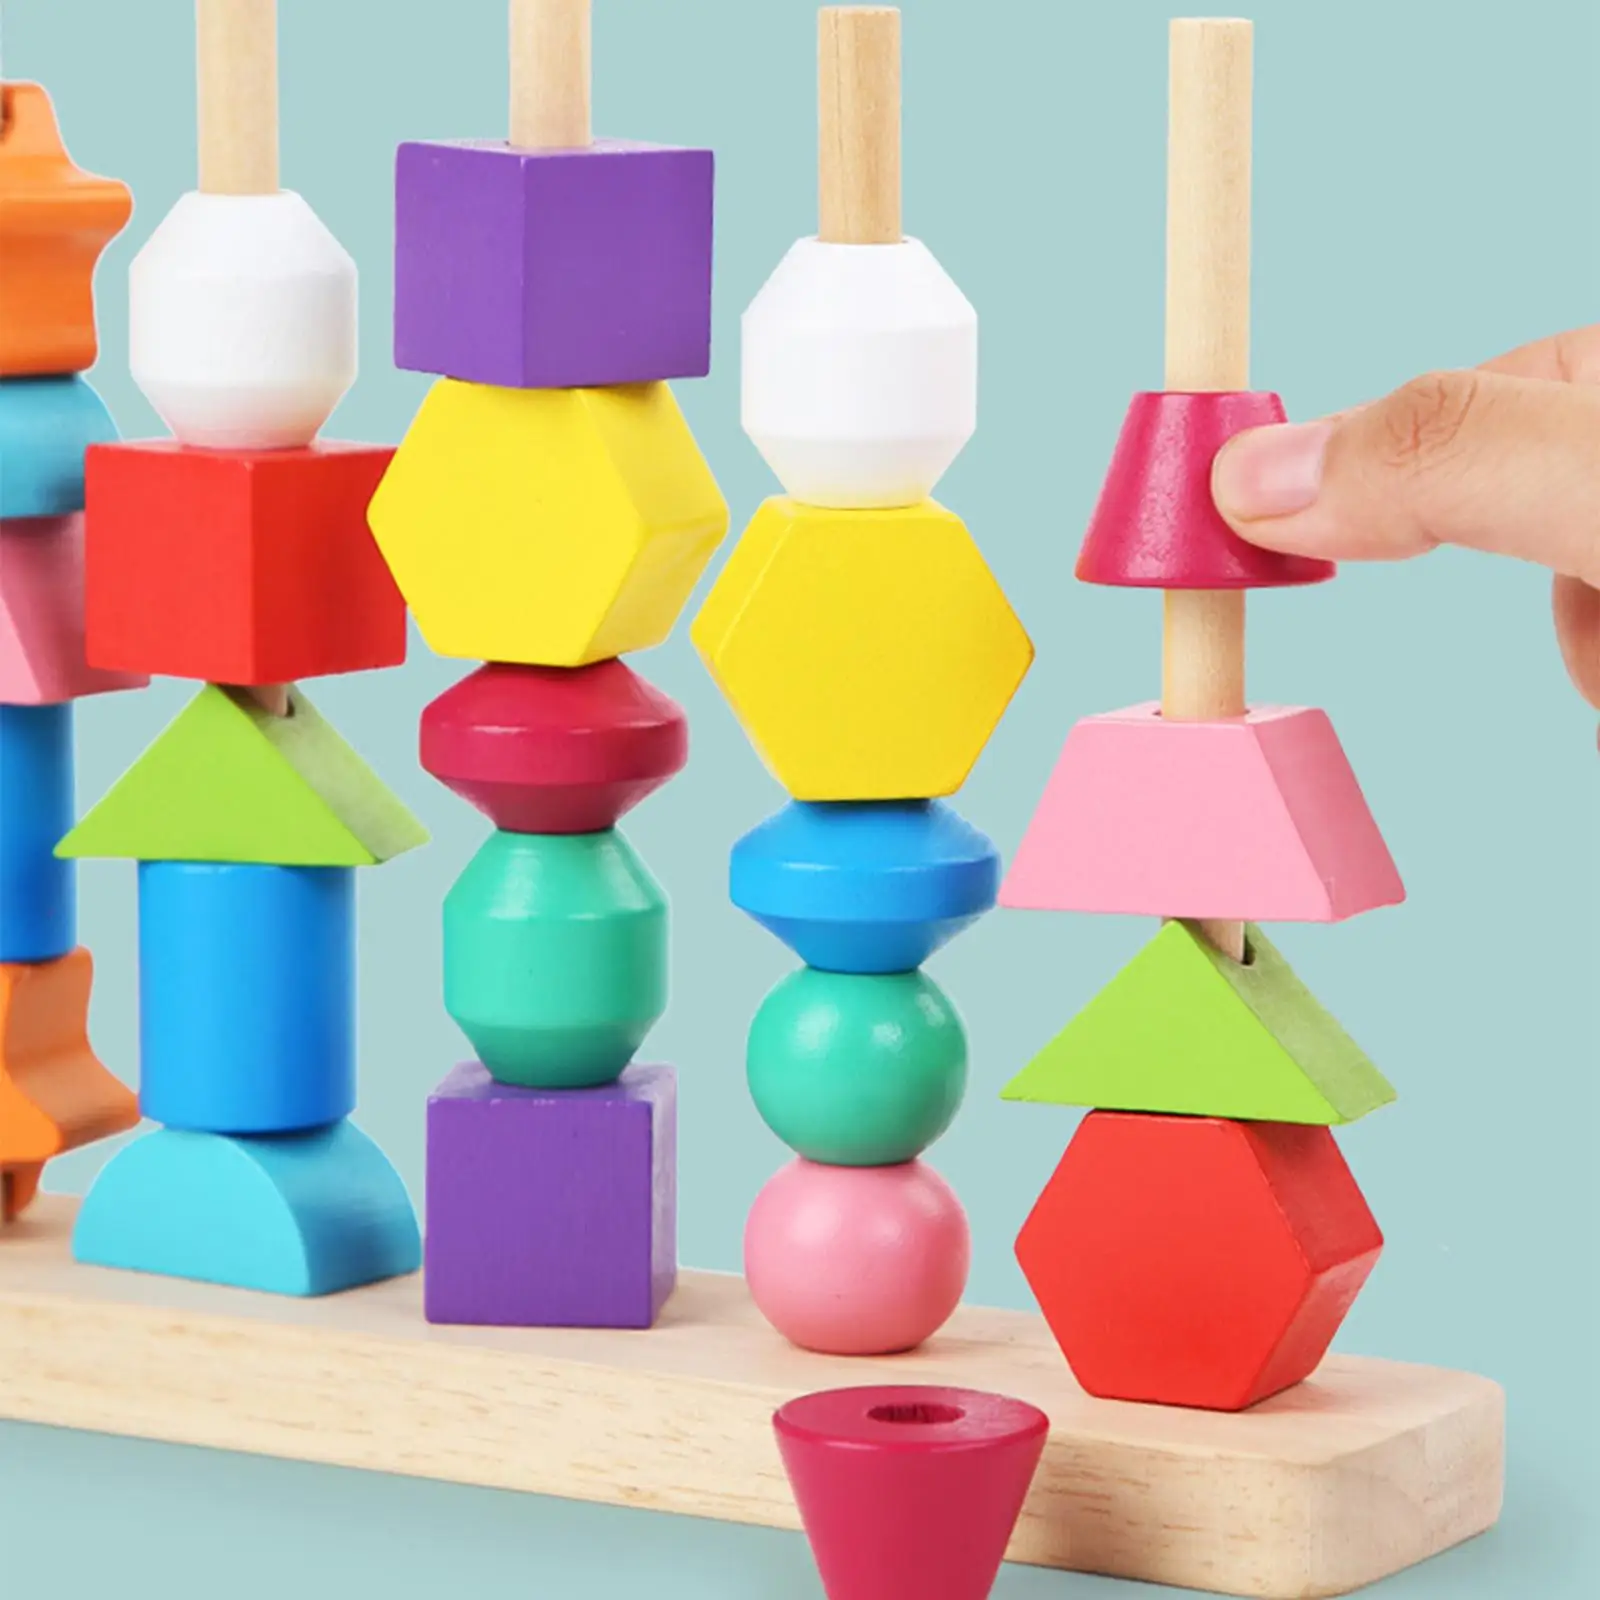 Five Sets Beaded Toys Educational Blocks Enlightenment Sensory Toys Wooden Learning for Toddlers Children Birthday Gift Kids